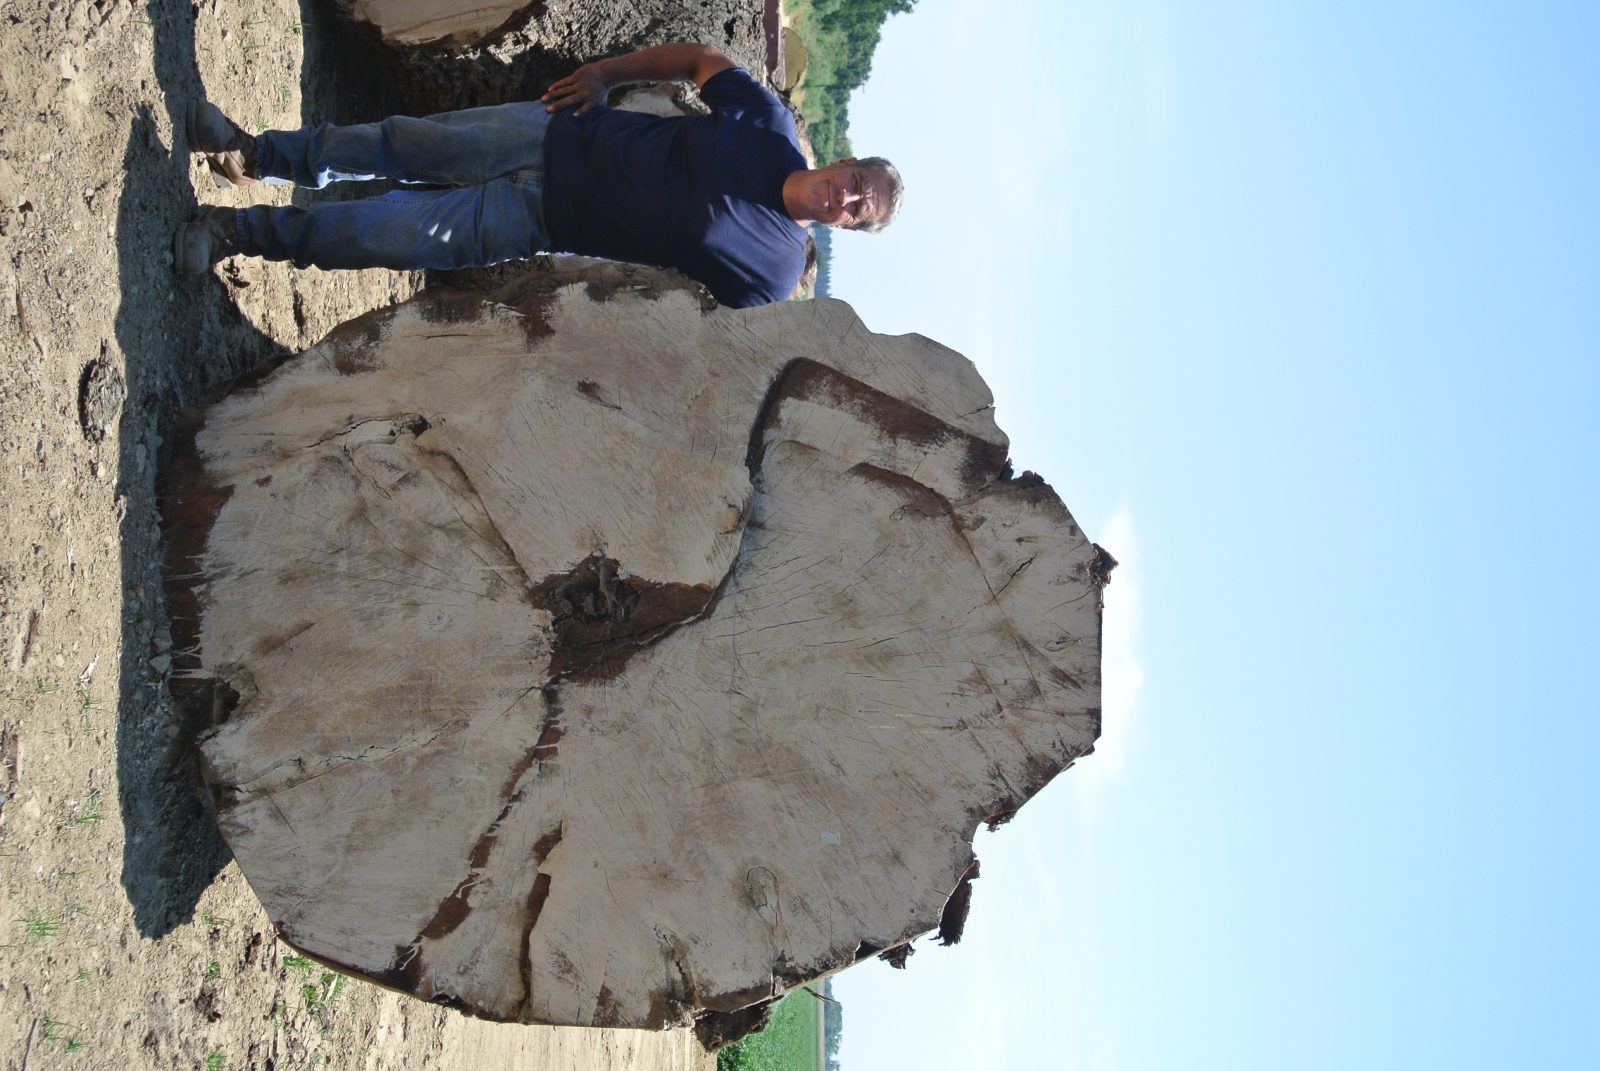 Hunski Hardwoods Reclaims an 8ft Wide by 8ft Long Black Walnut Tree!